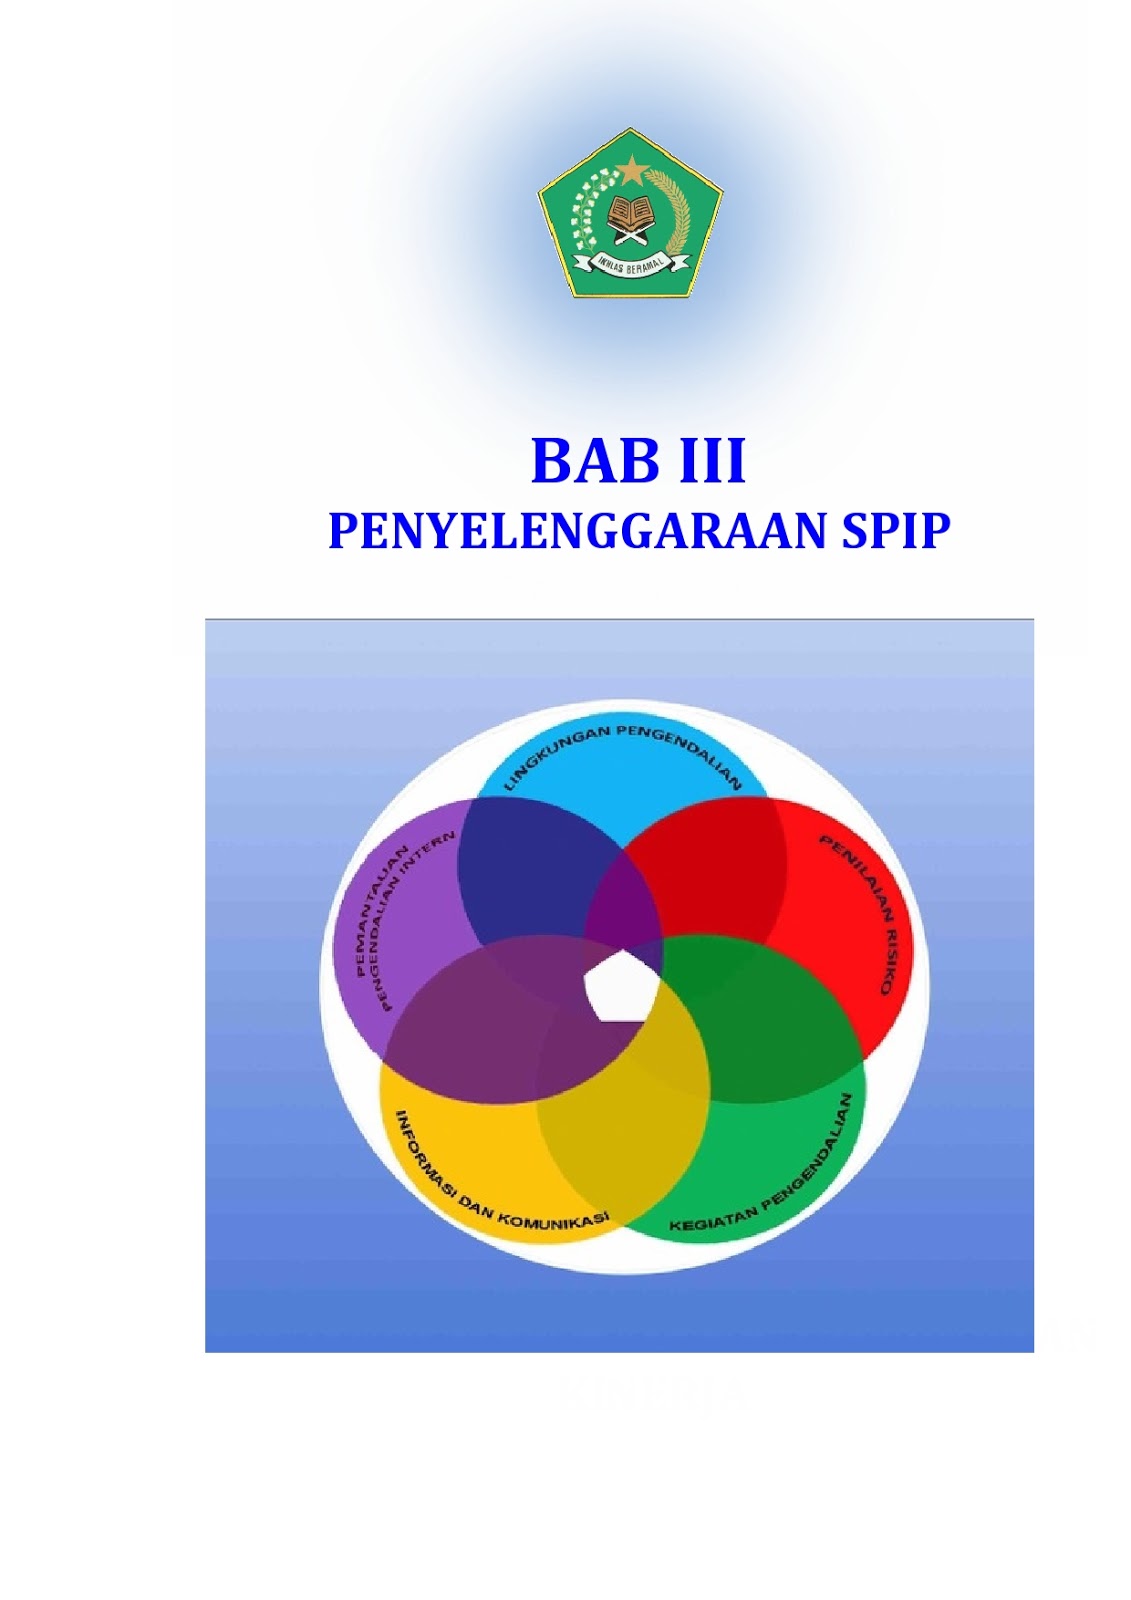 BAB III Penyelenggaraan SPIP Contoh Laporan